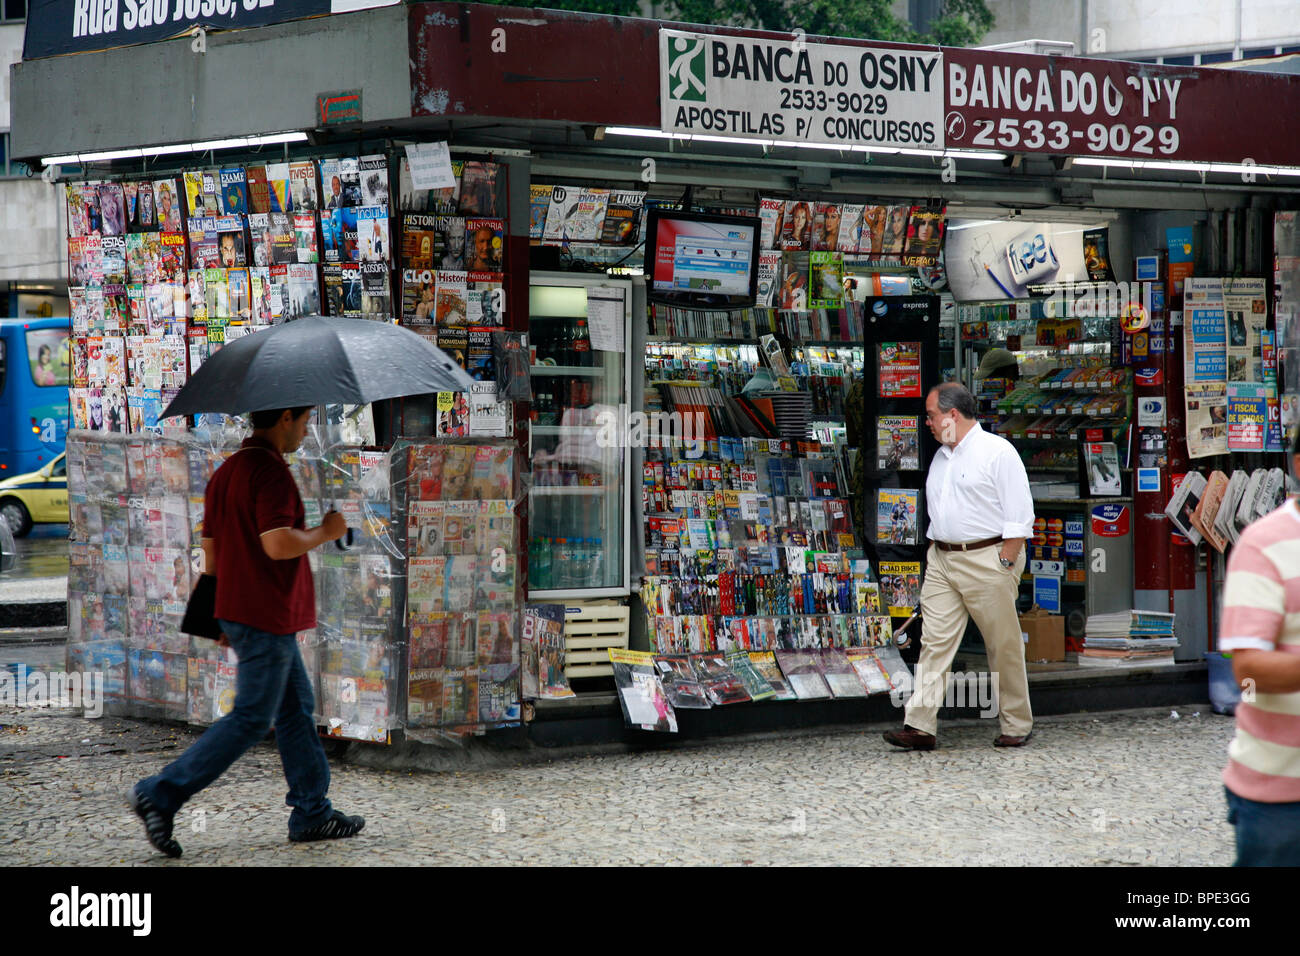 News stand at the Centro, Rio's downtown. Rio de Janeiro, Brazil. Stock Photo